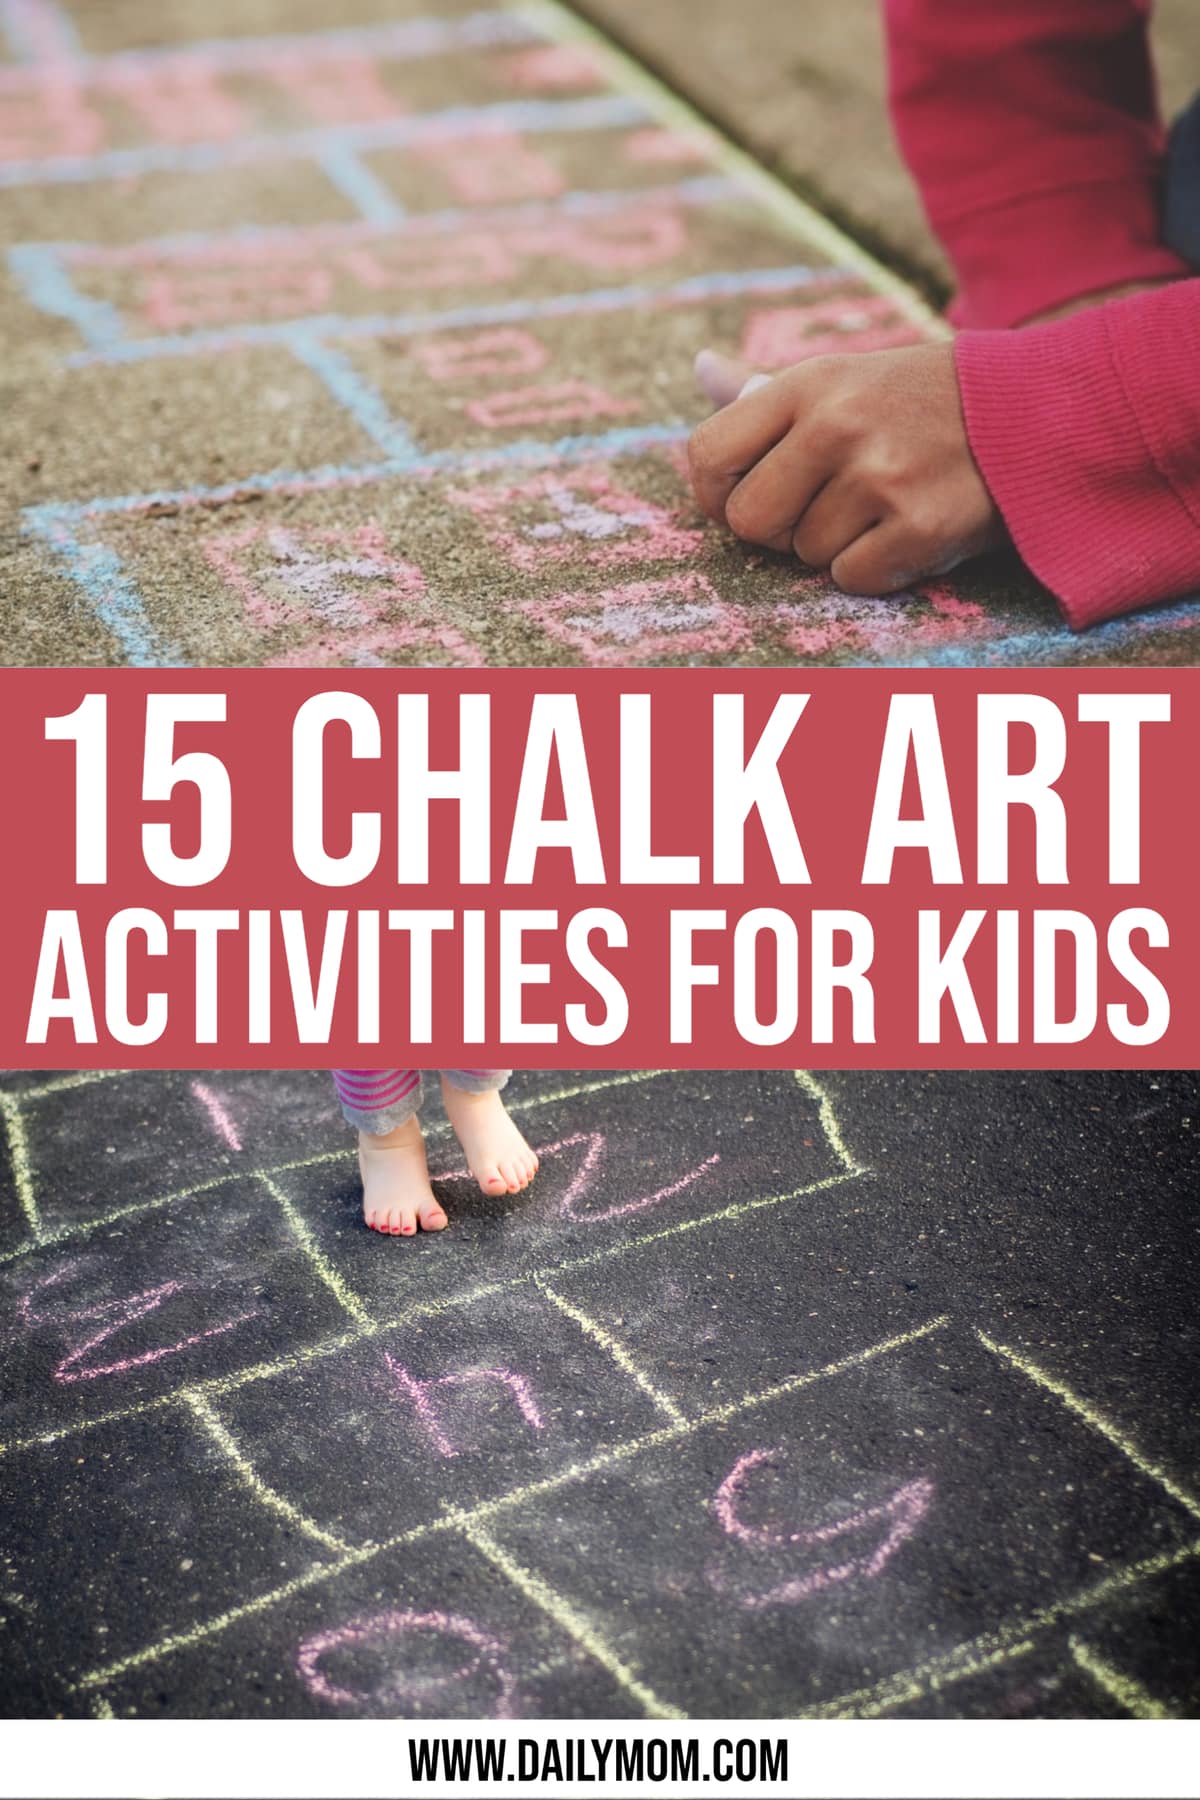 Chalk Art 